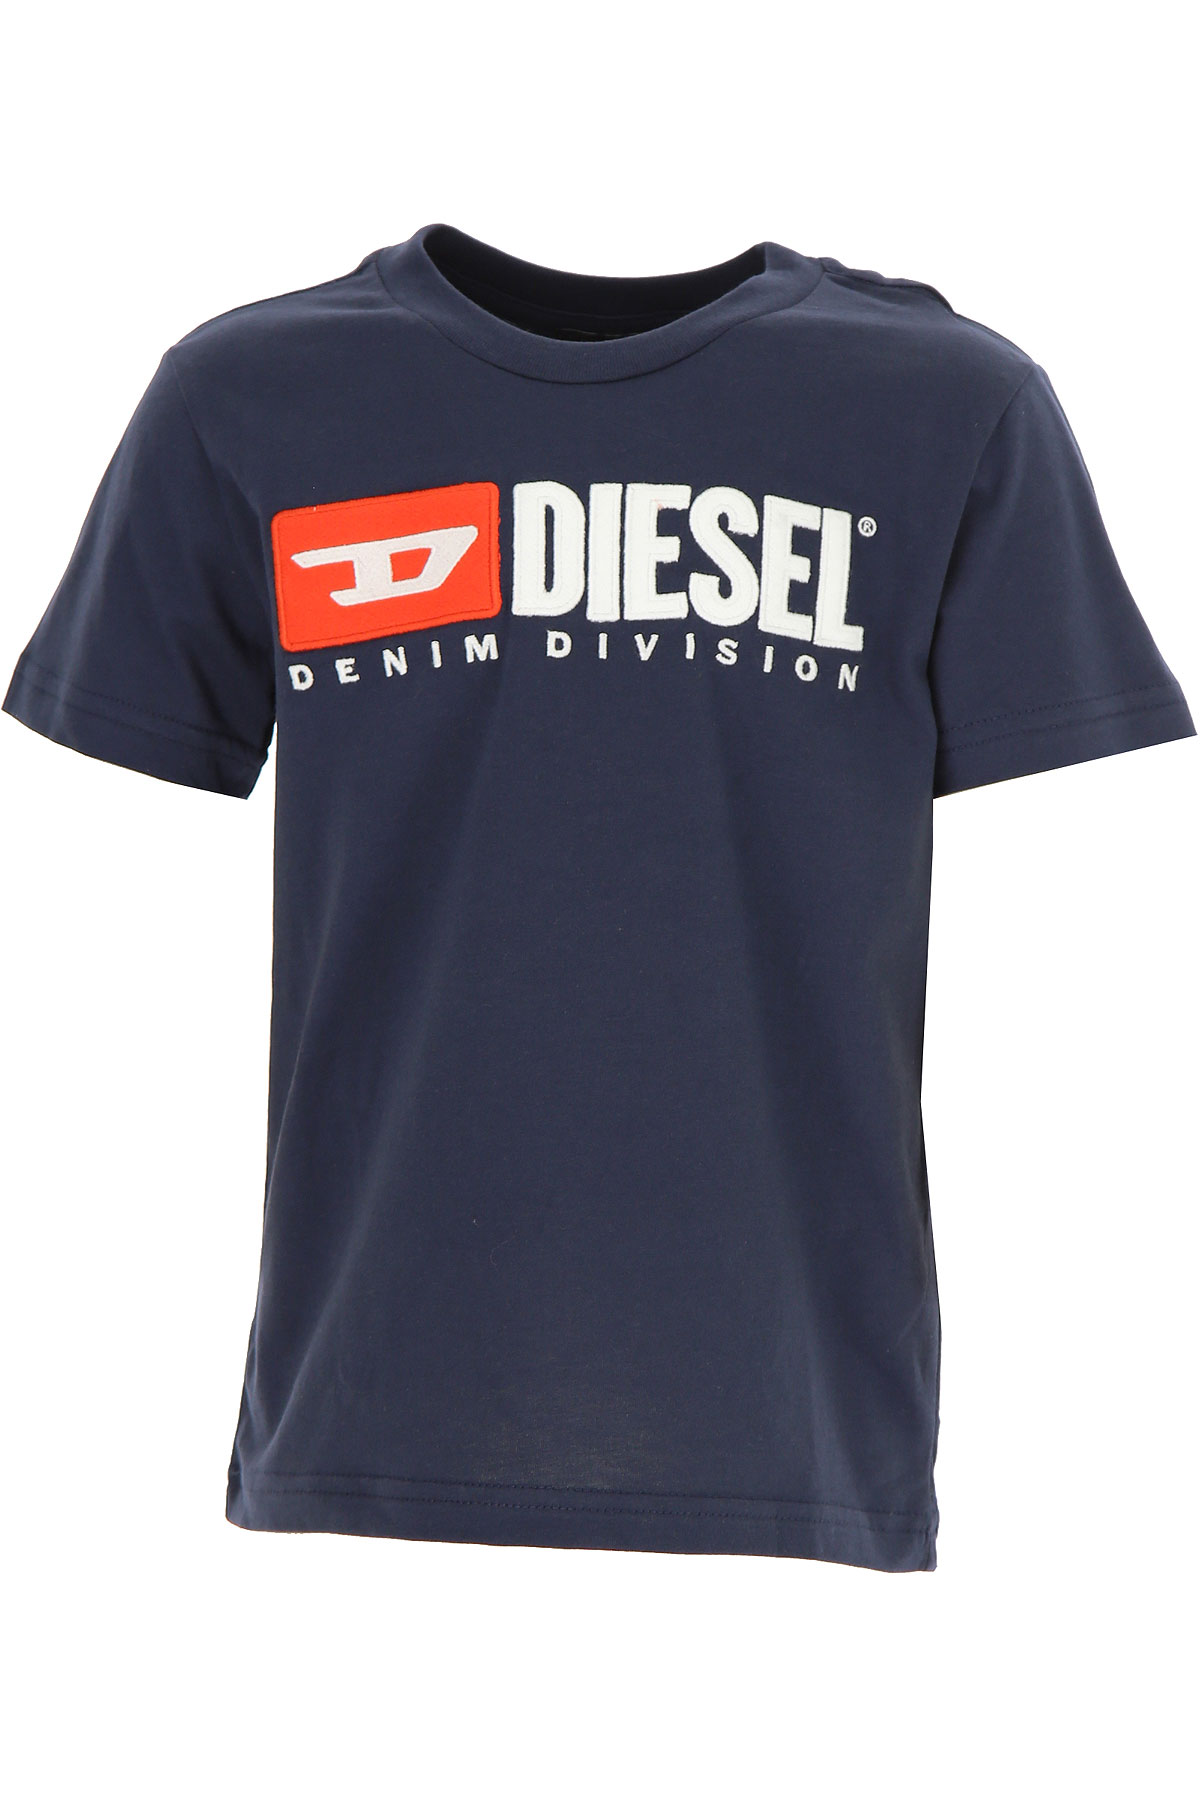 Diesel Kinder T-Shirt für Jungen, Blau, Baumwolle, 2017, 10Y 12Y 14Y 16Y 8Y